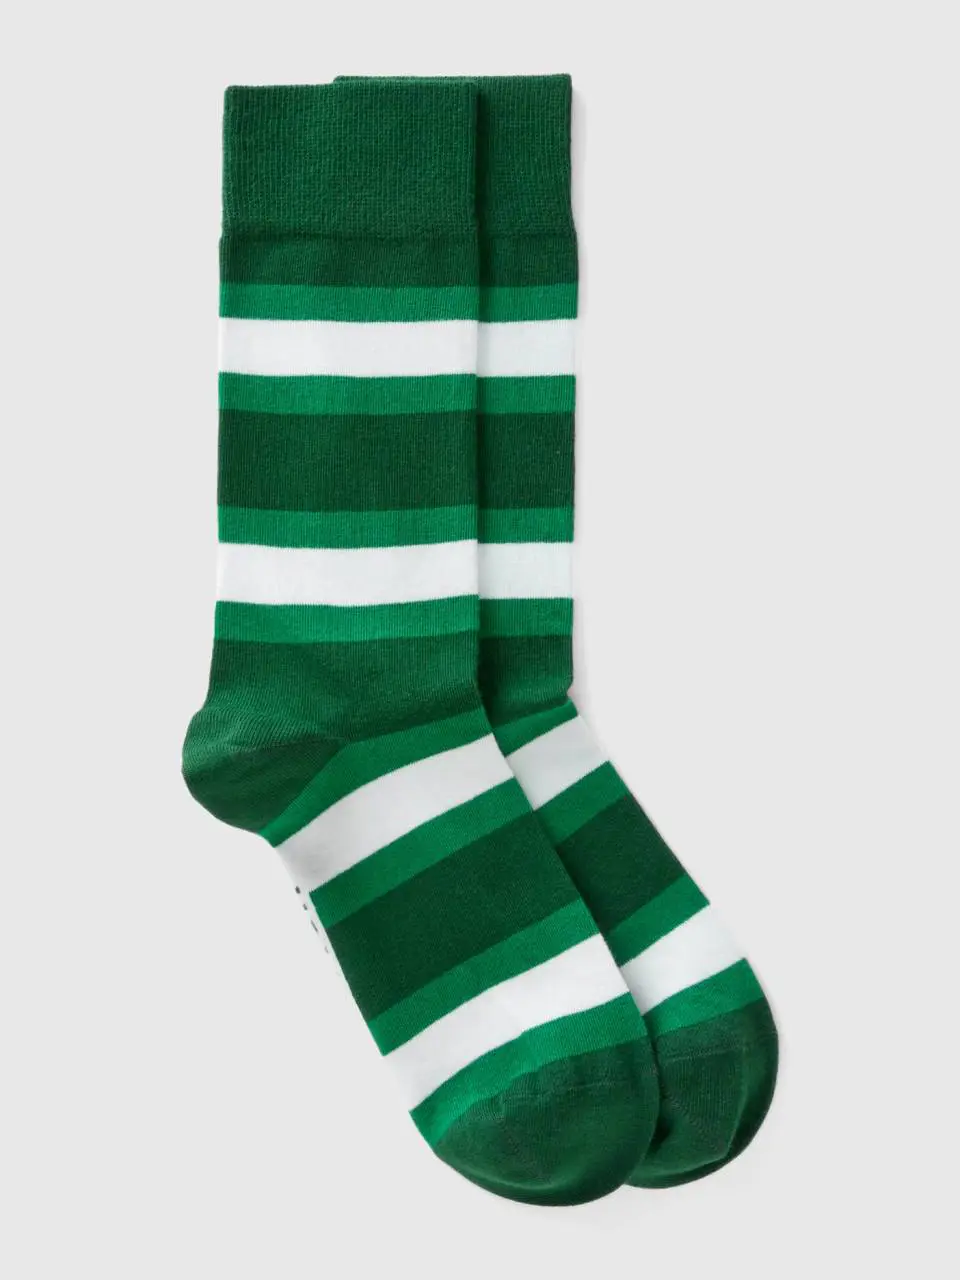 Benetton green striped socks. 1